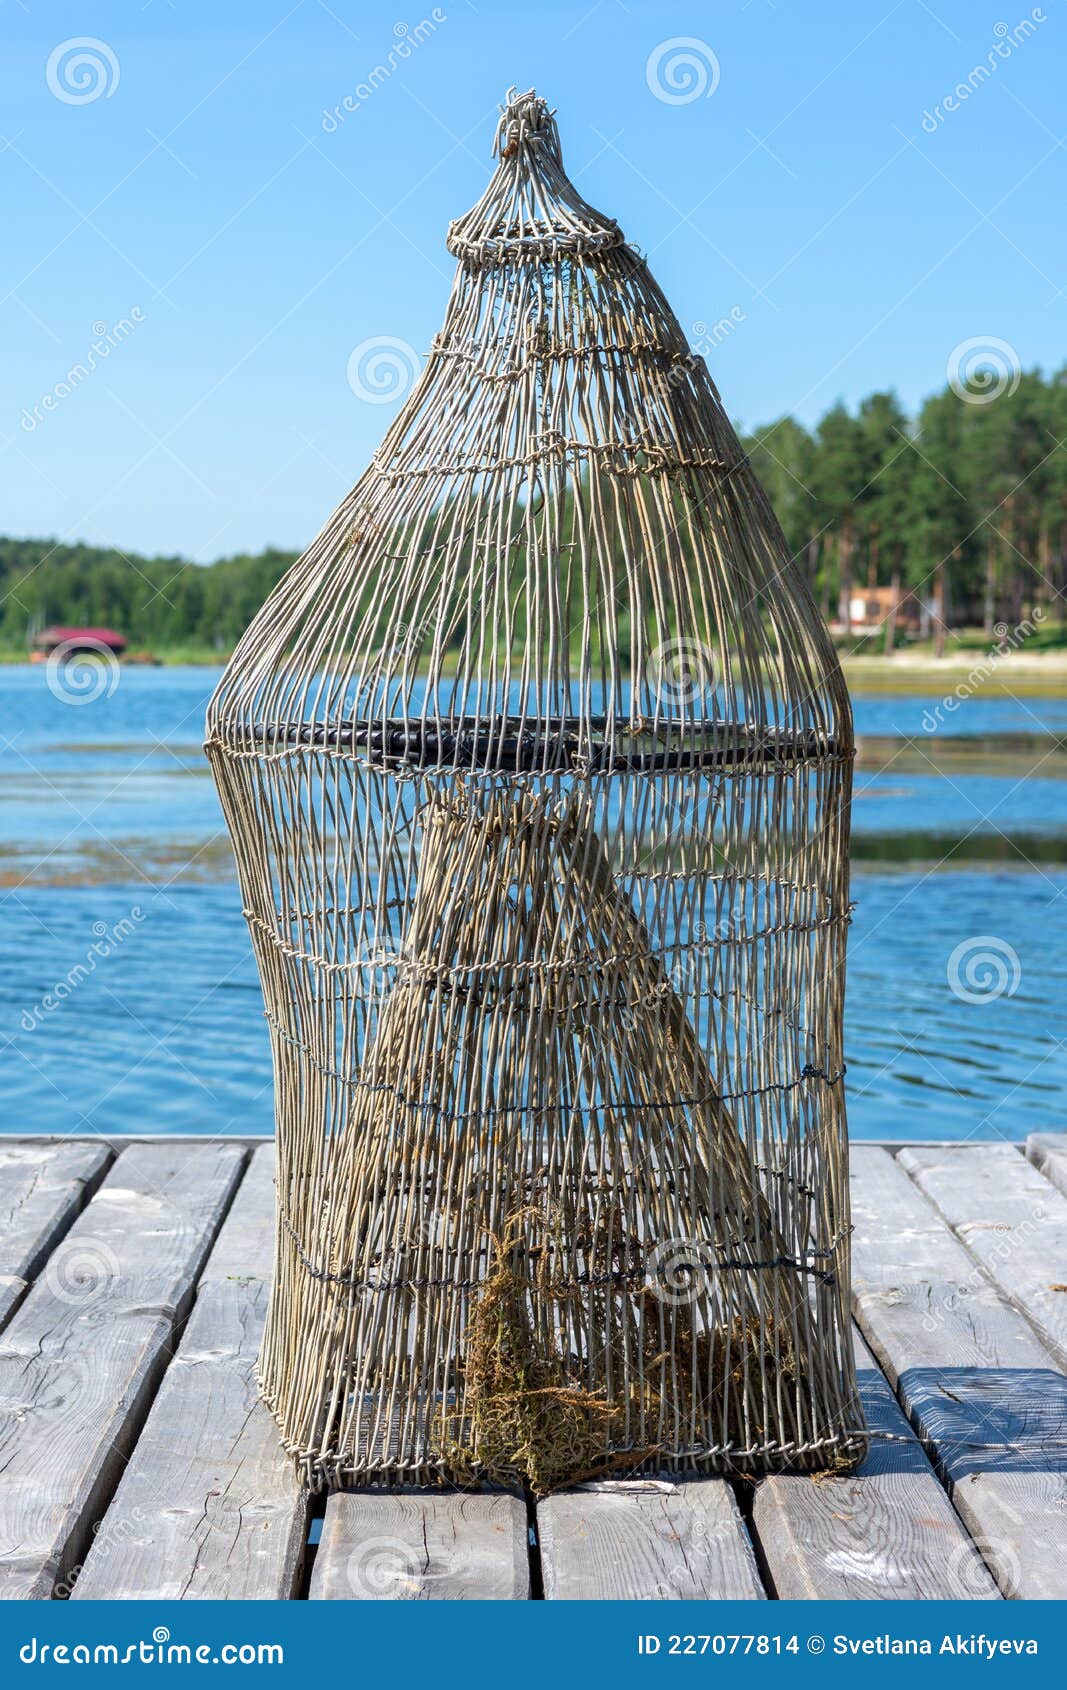 https://thumbs.dreamstime.com/z/fish-trap-wooden-pier-lake-shore-fishing-summer-day-227077814.jpg